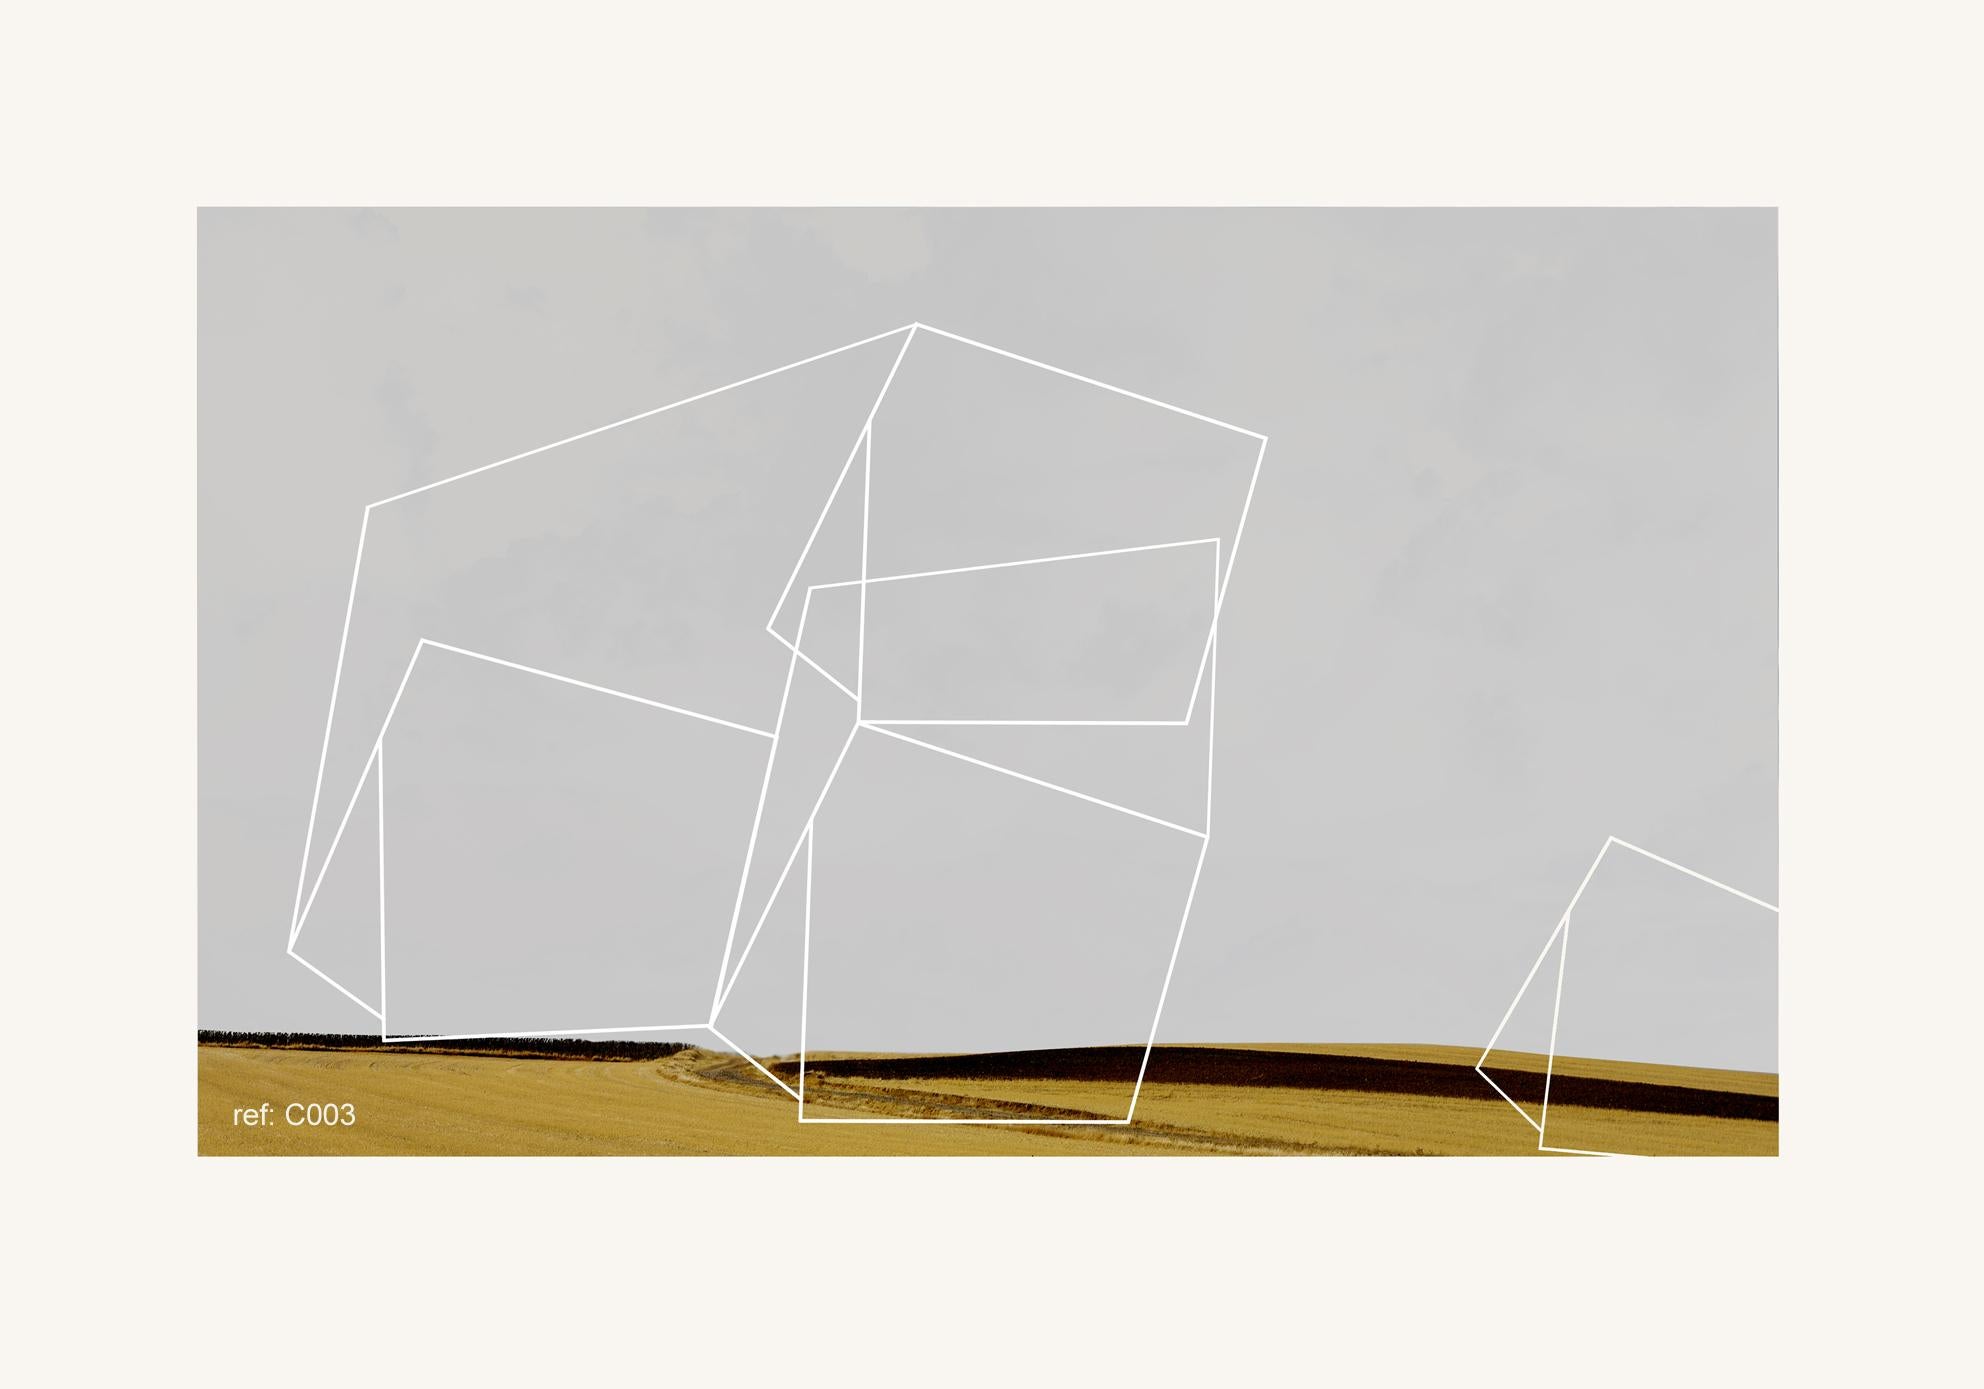 Francisco Nicolás Abstract Print - Estío - Contemporary, Abstract, Pop art, Surrealist, geometric, landscape 